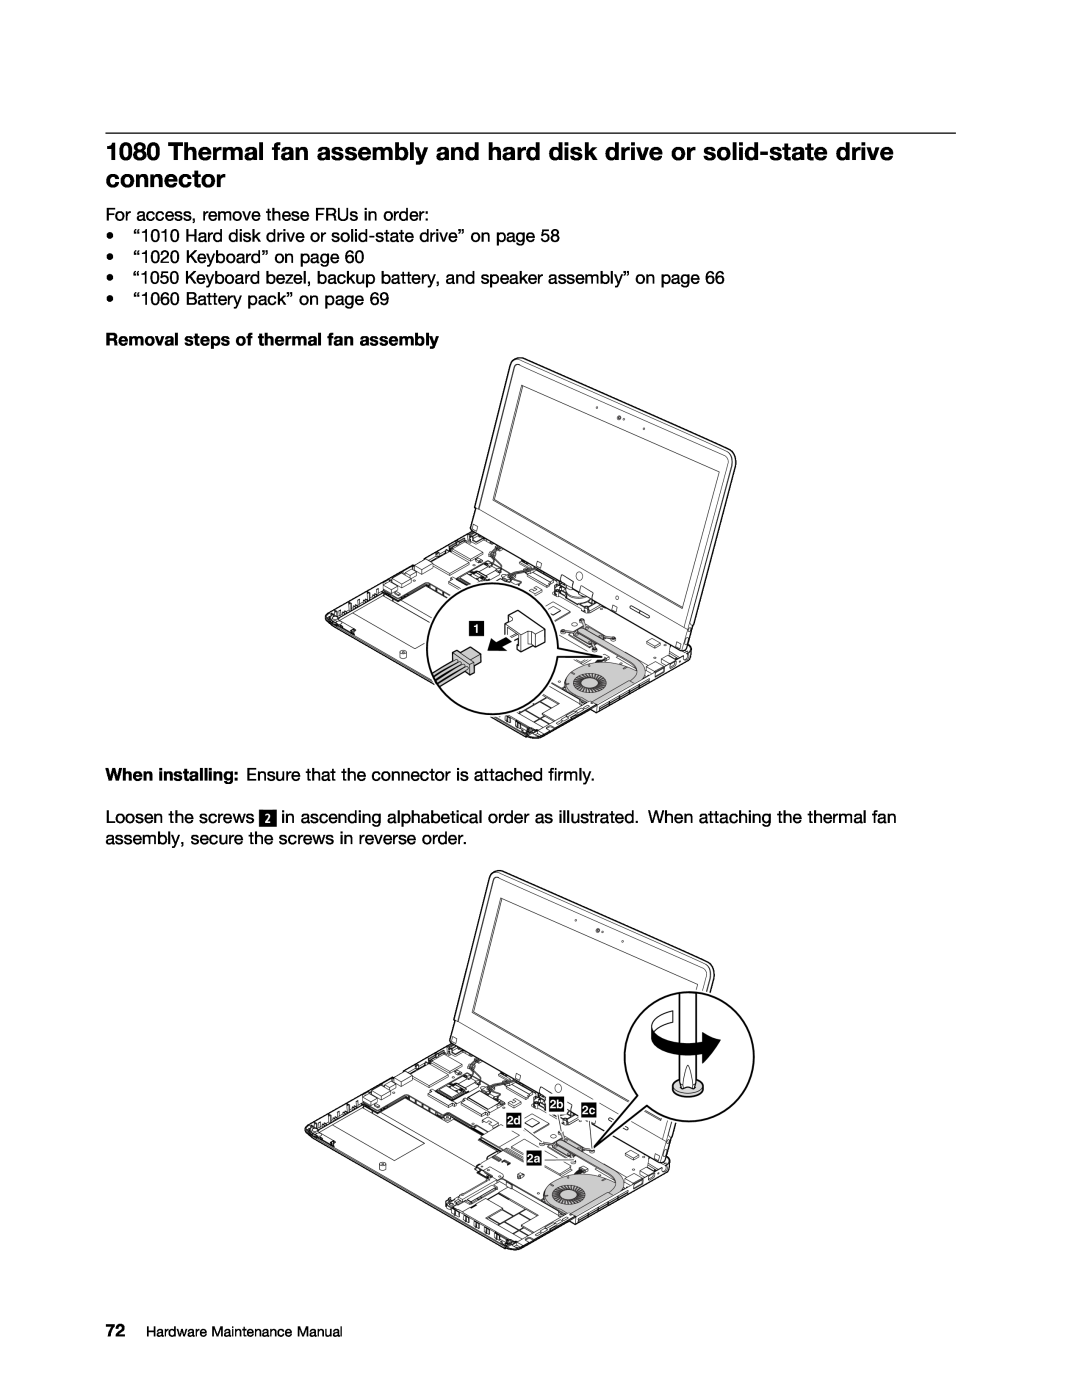 Lenovo S230U, 33472YU manual Removal steps of thermal fan assembly, Hardware Maintenance Manual 